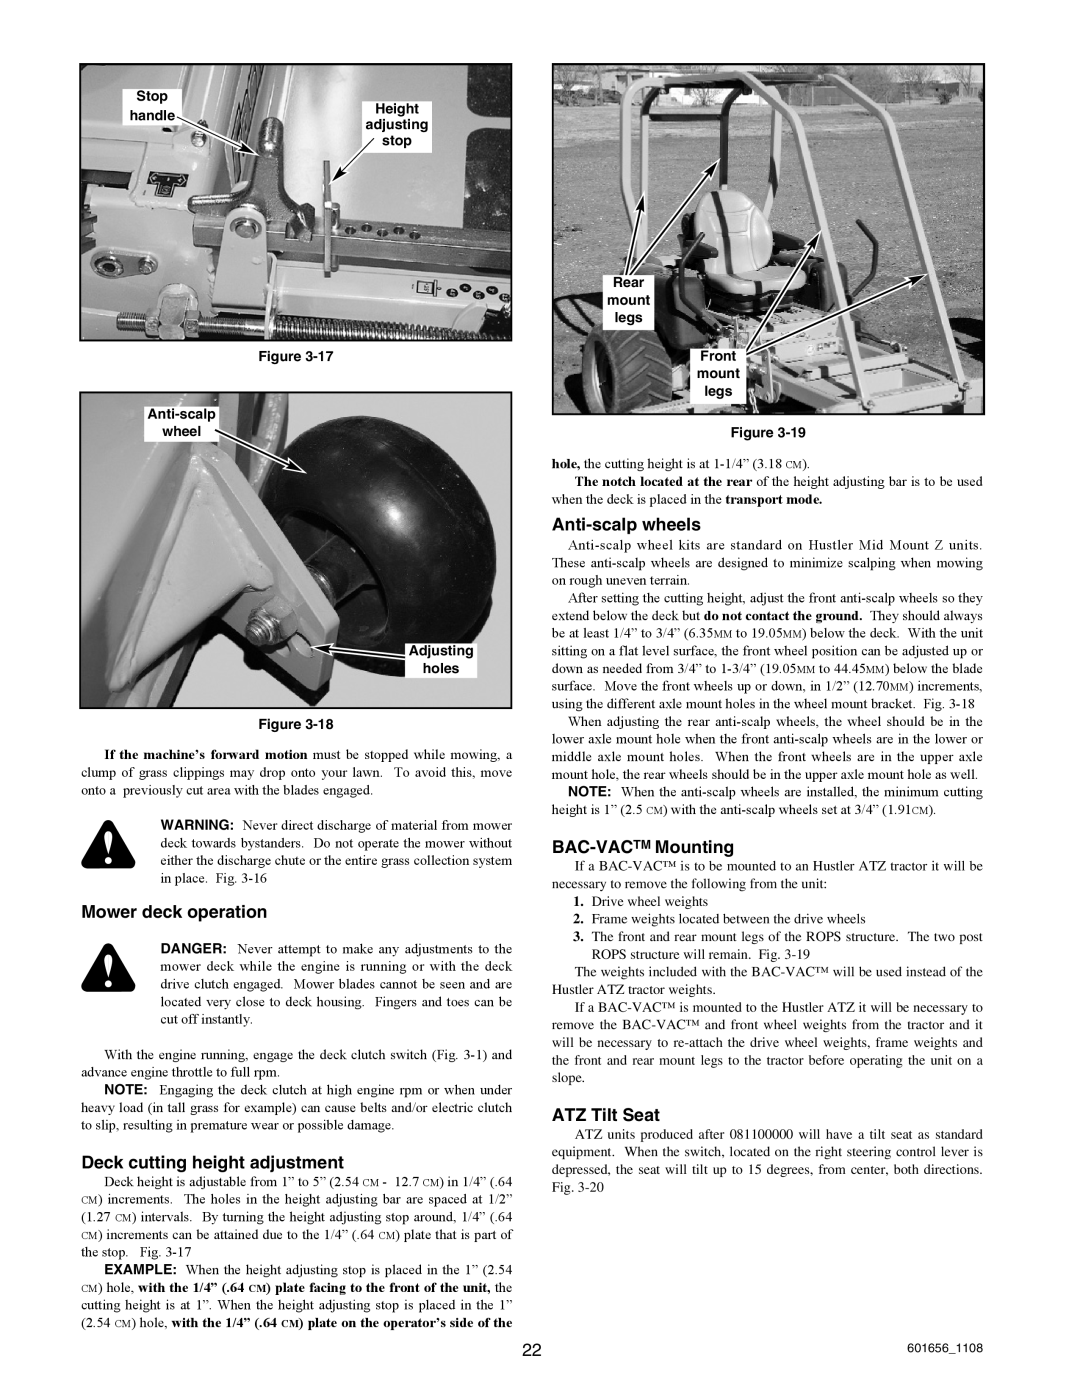 Hustler Turf 927814, 927566 Mower deck operation, Deck cutting height adjustment, Anti-scalp wheels, BAC-VACTM Mounting 